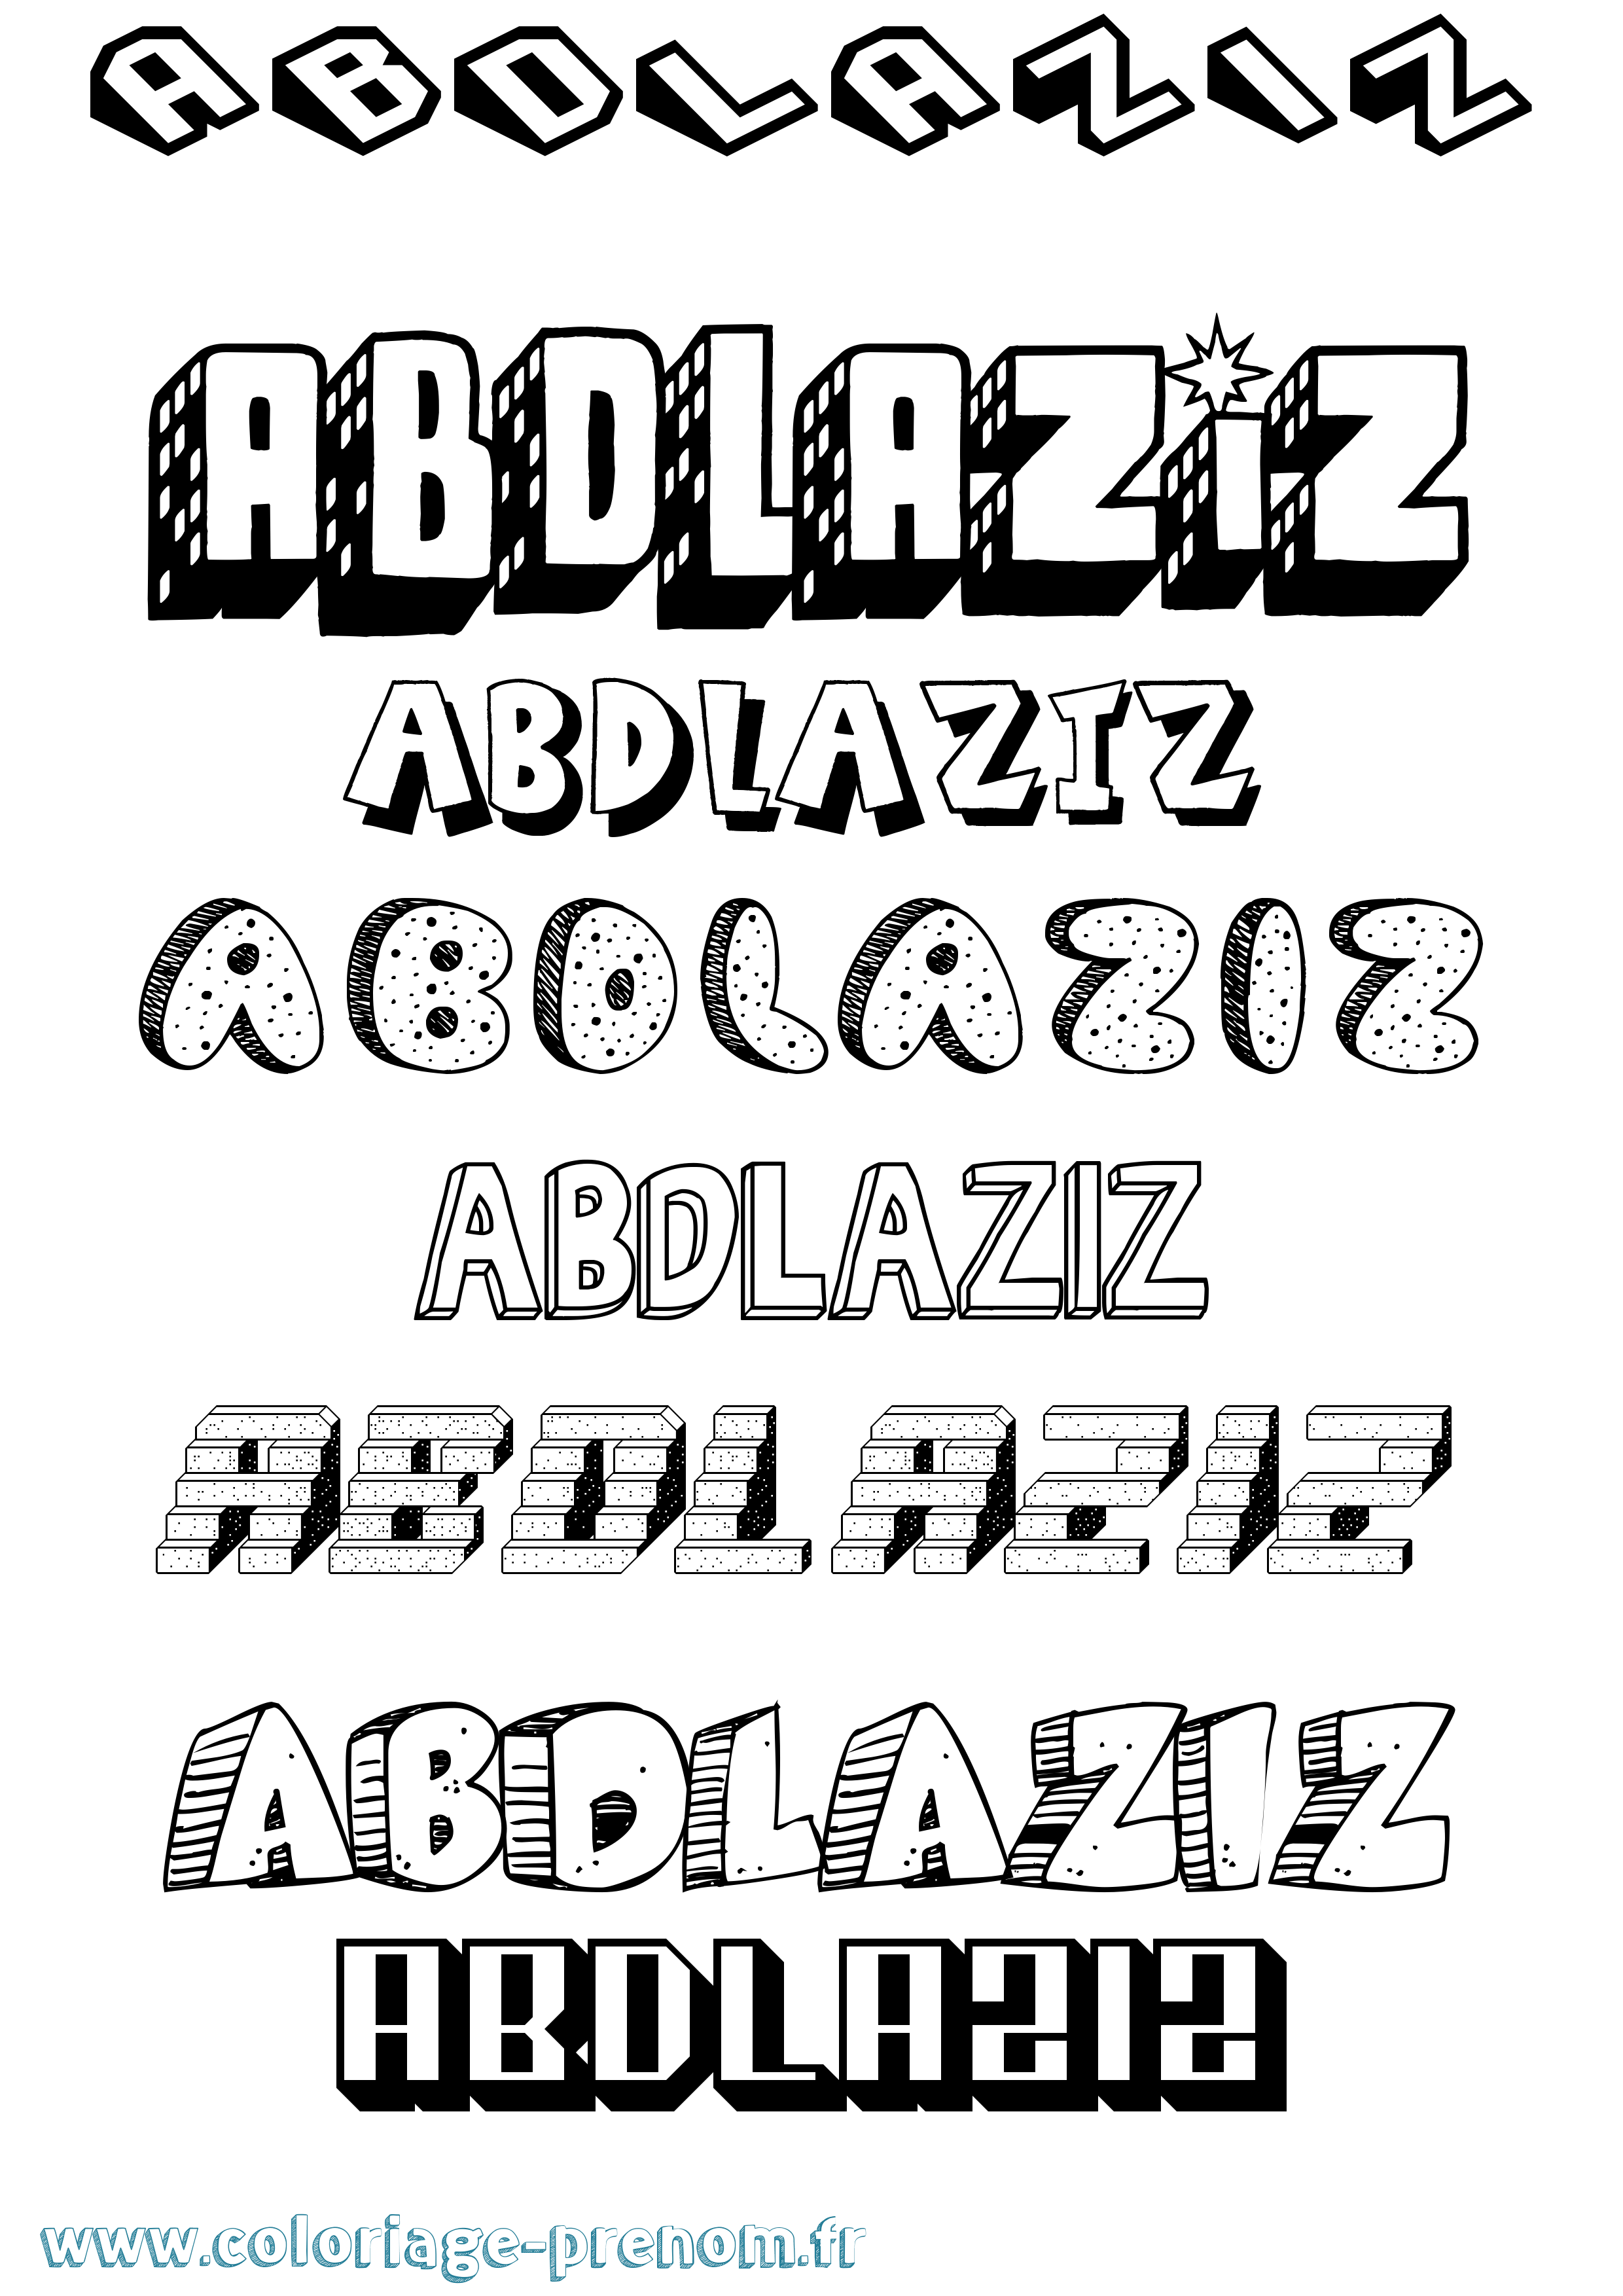 Coloriage prénom Abdlaziz Effet 3D